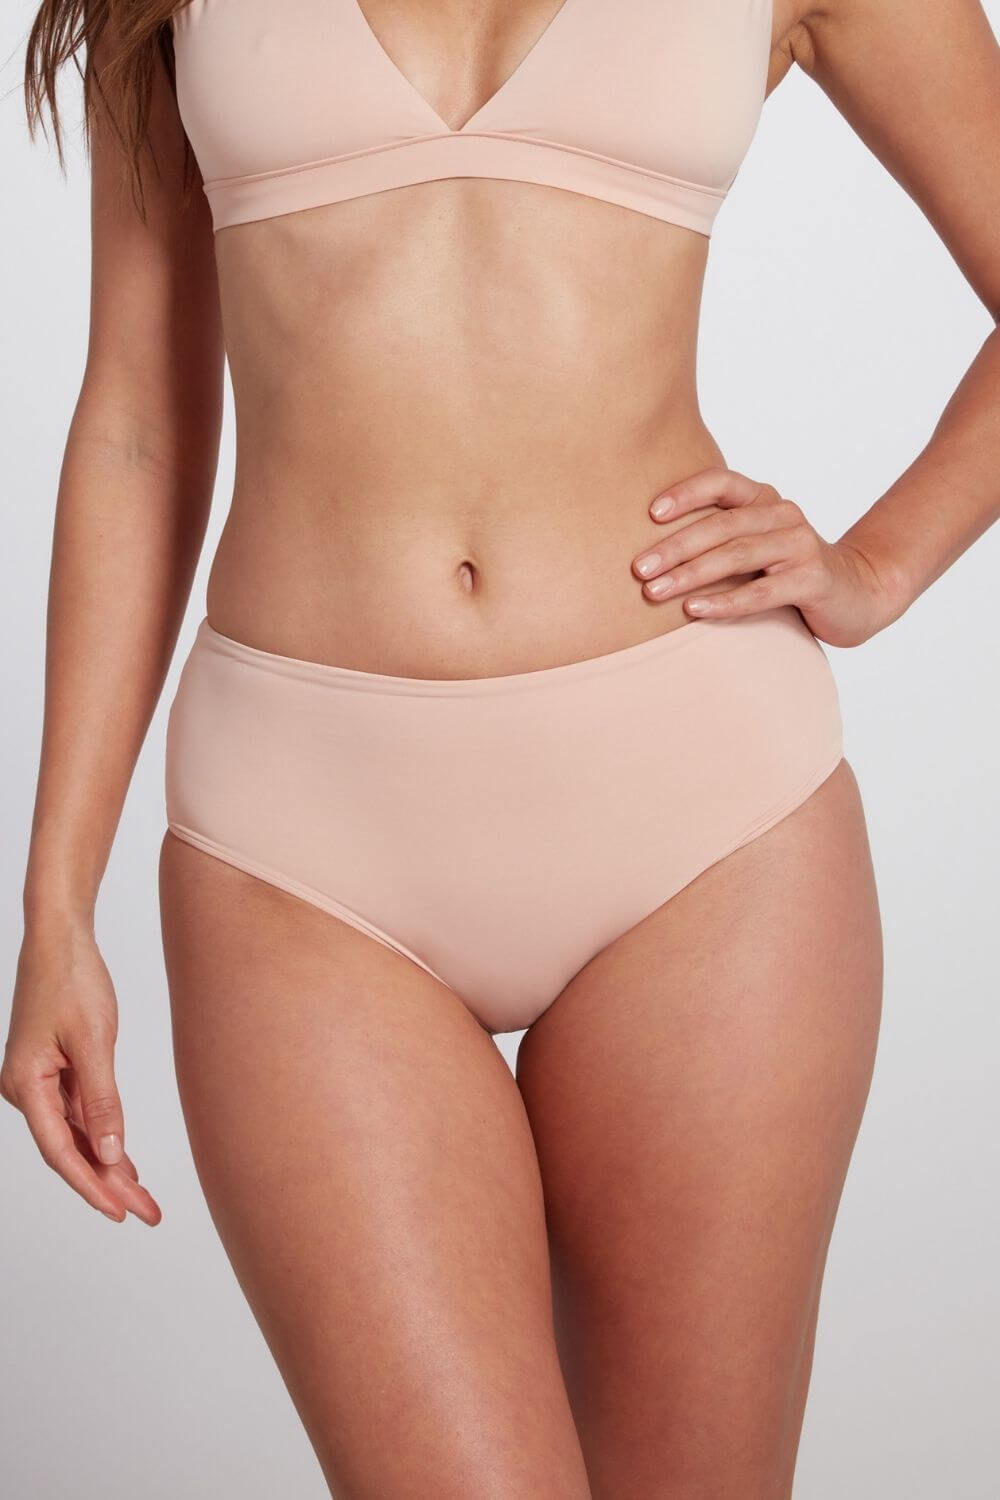 Classic mid-rise bikini bottom in pink blush.